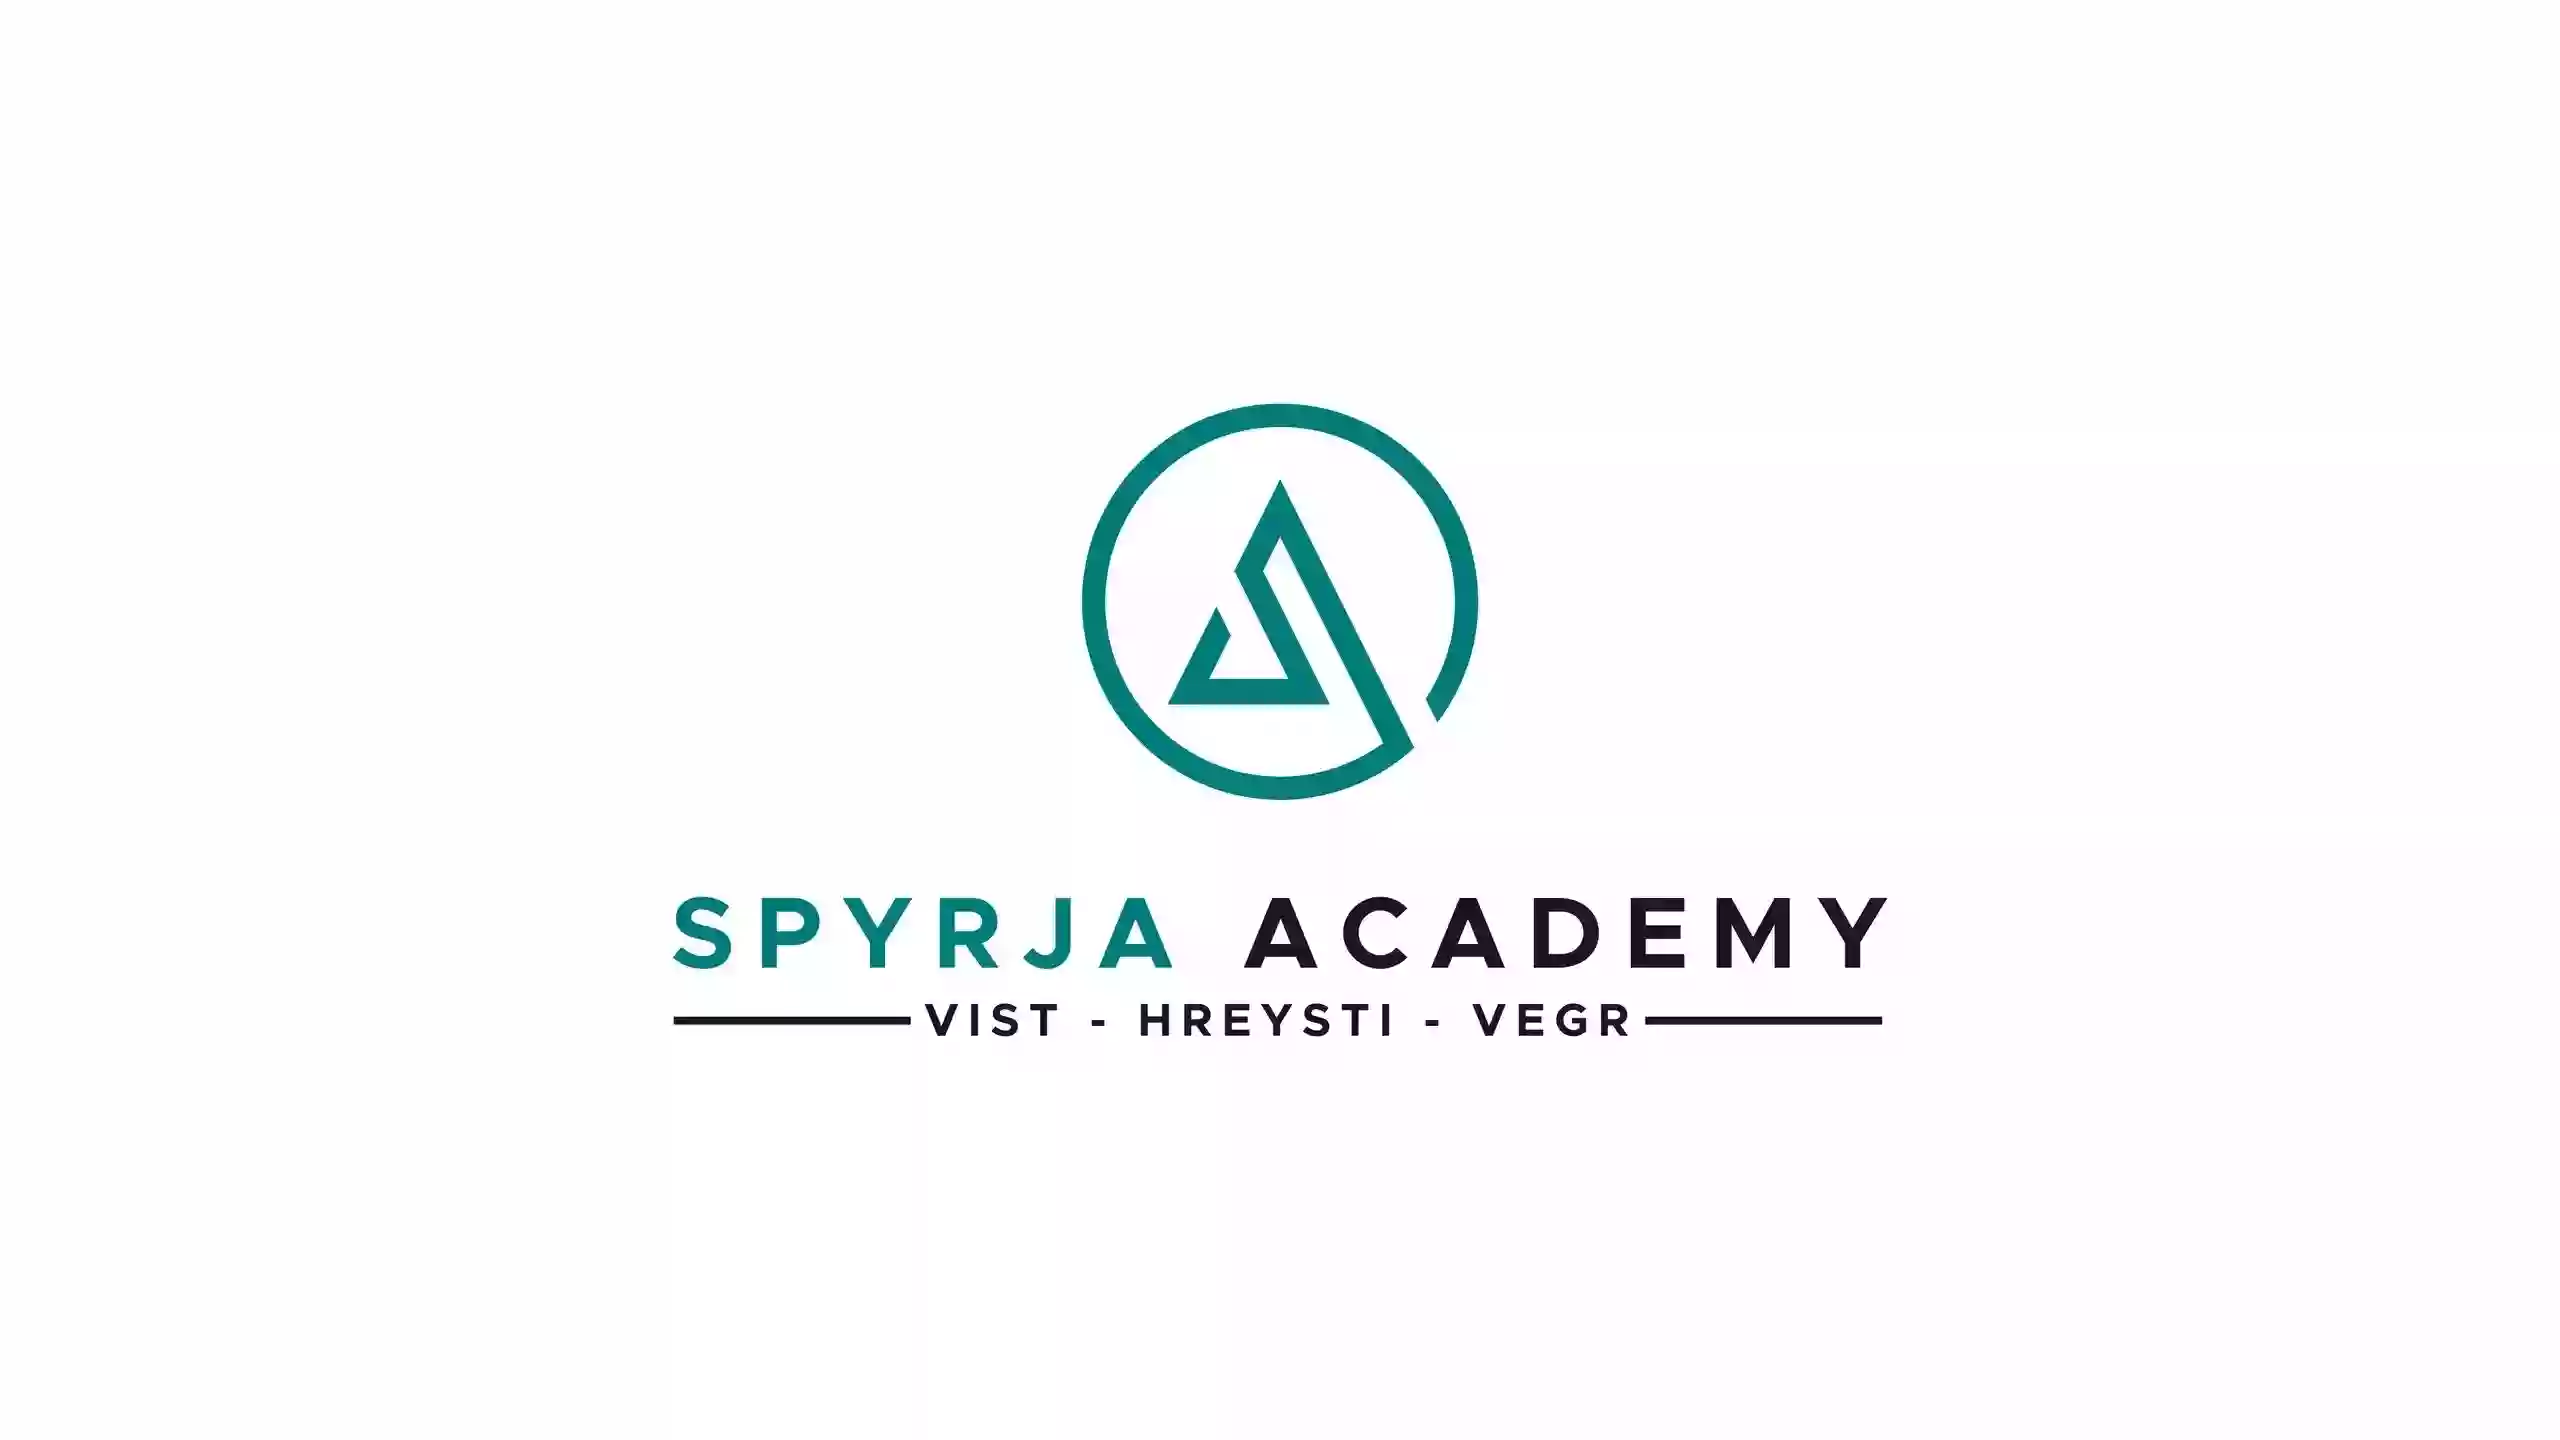 Spyrja Academy of New Braunfels